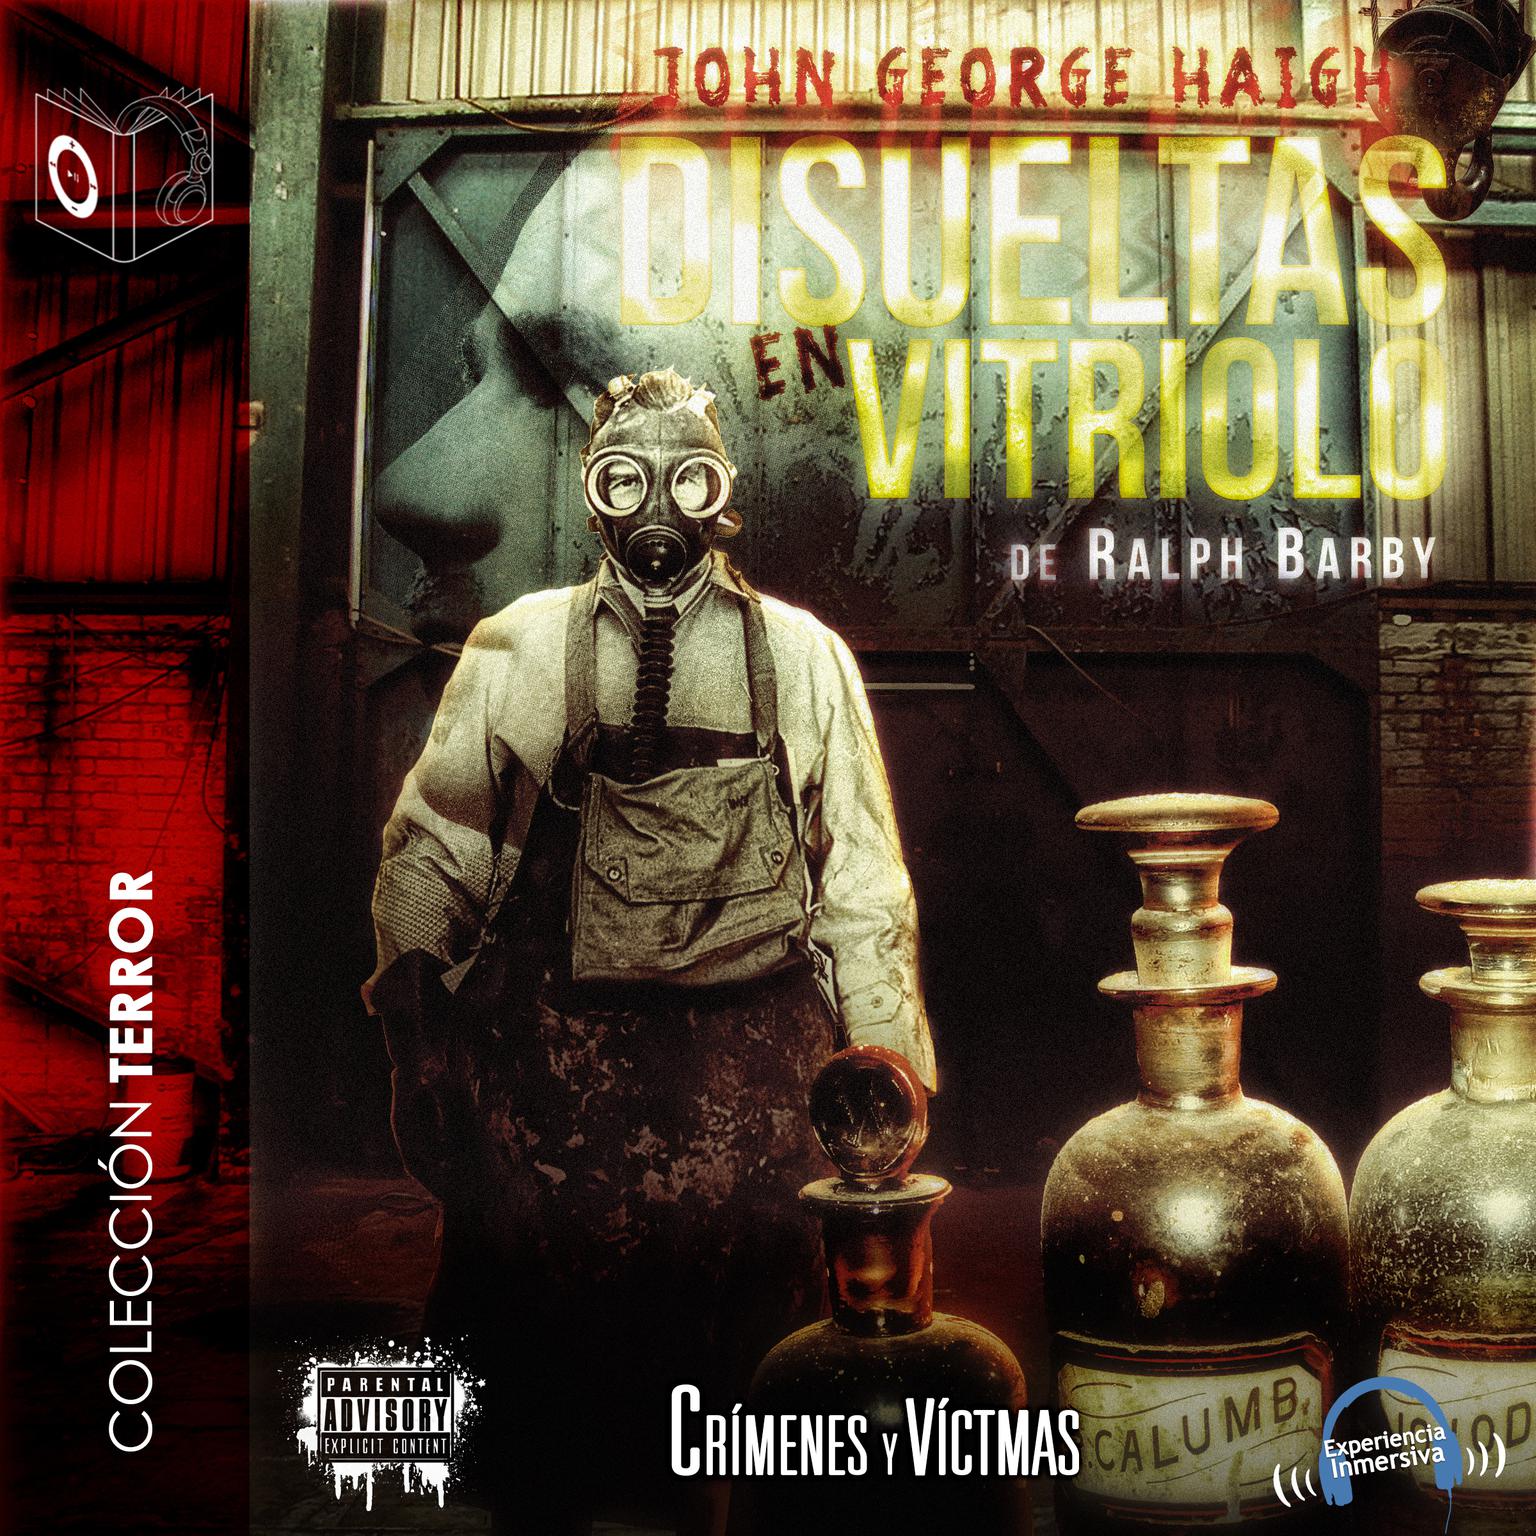 Disueltas en vitriolo: John George Haigh Audiobook, by Ralph Barby